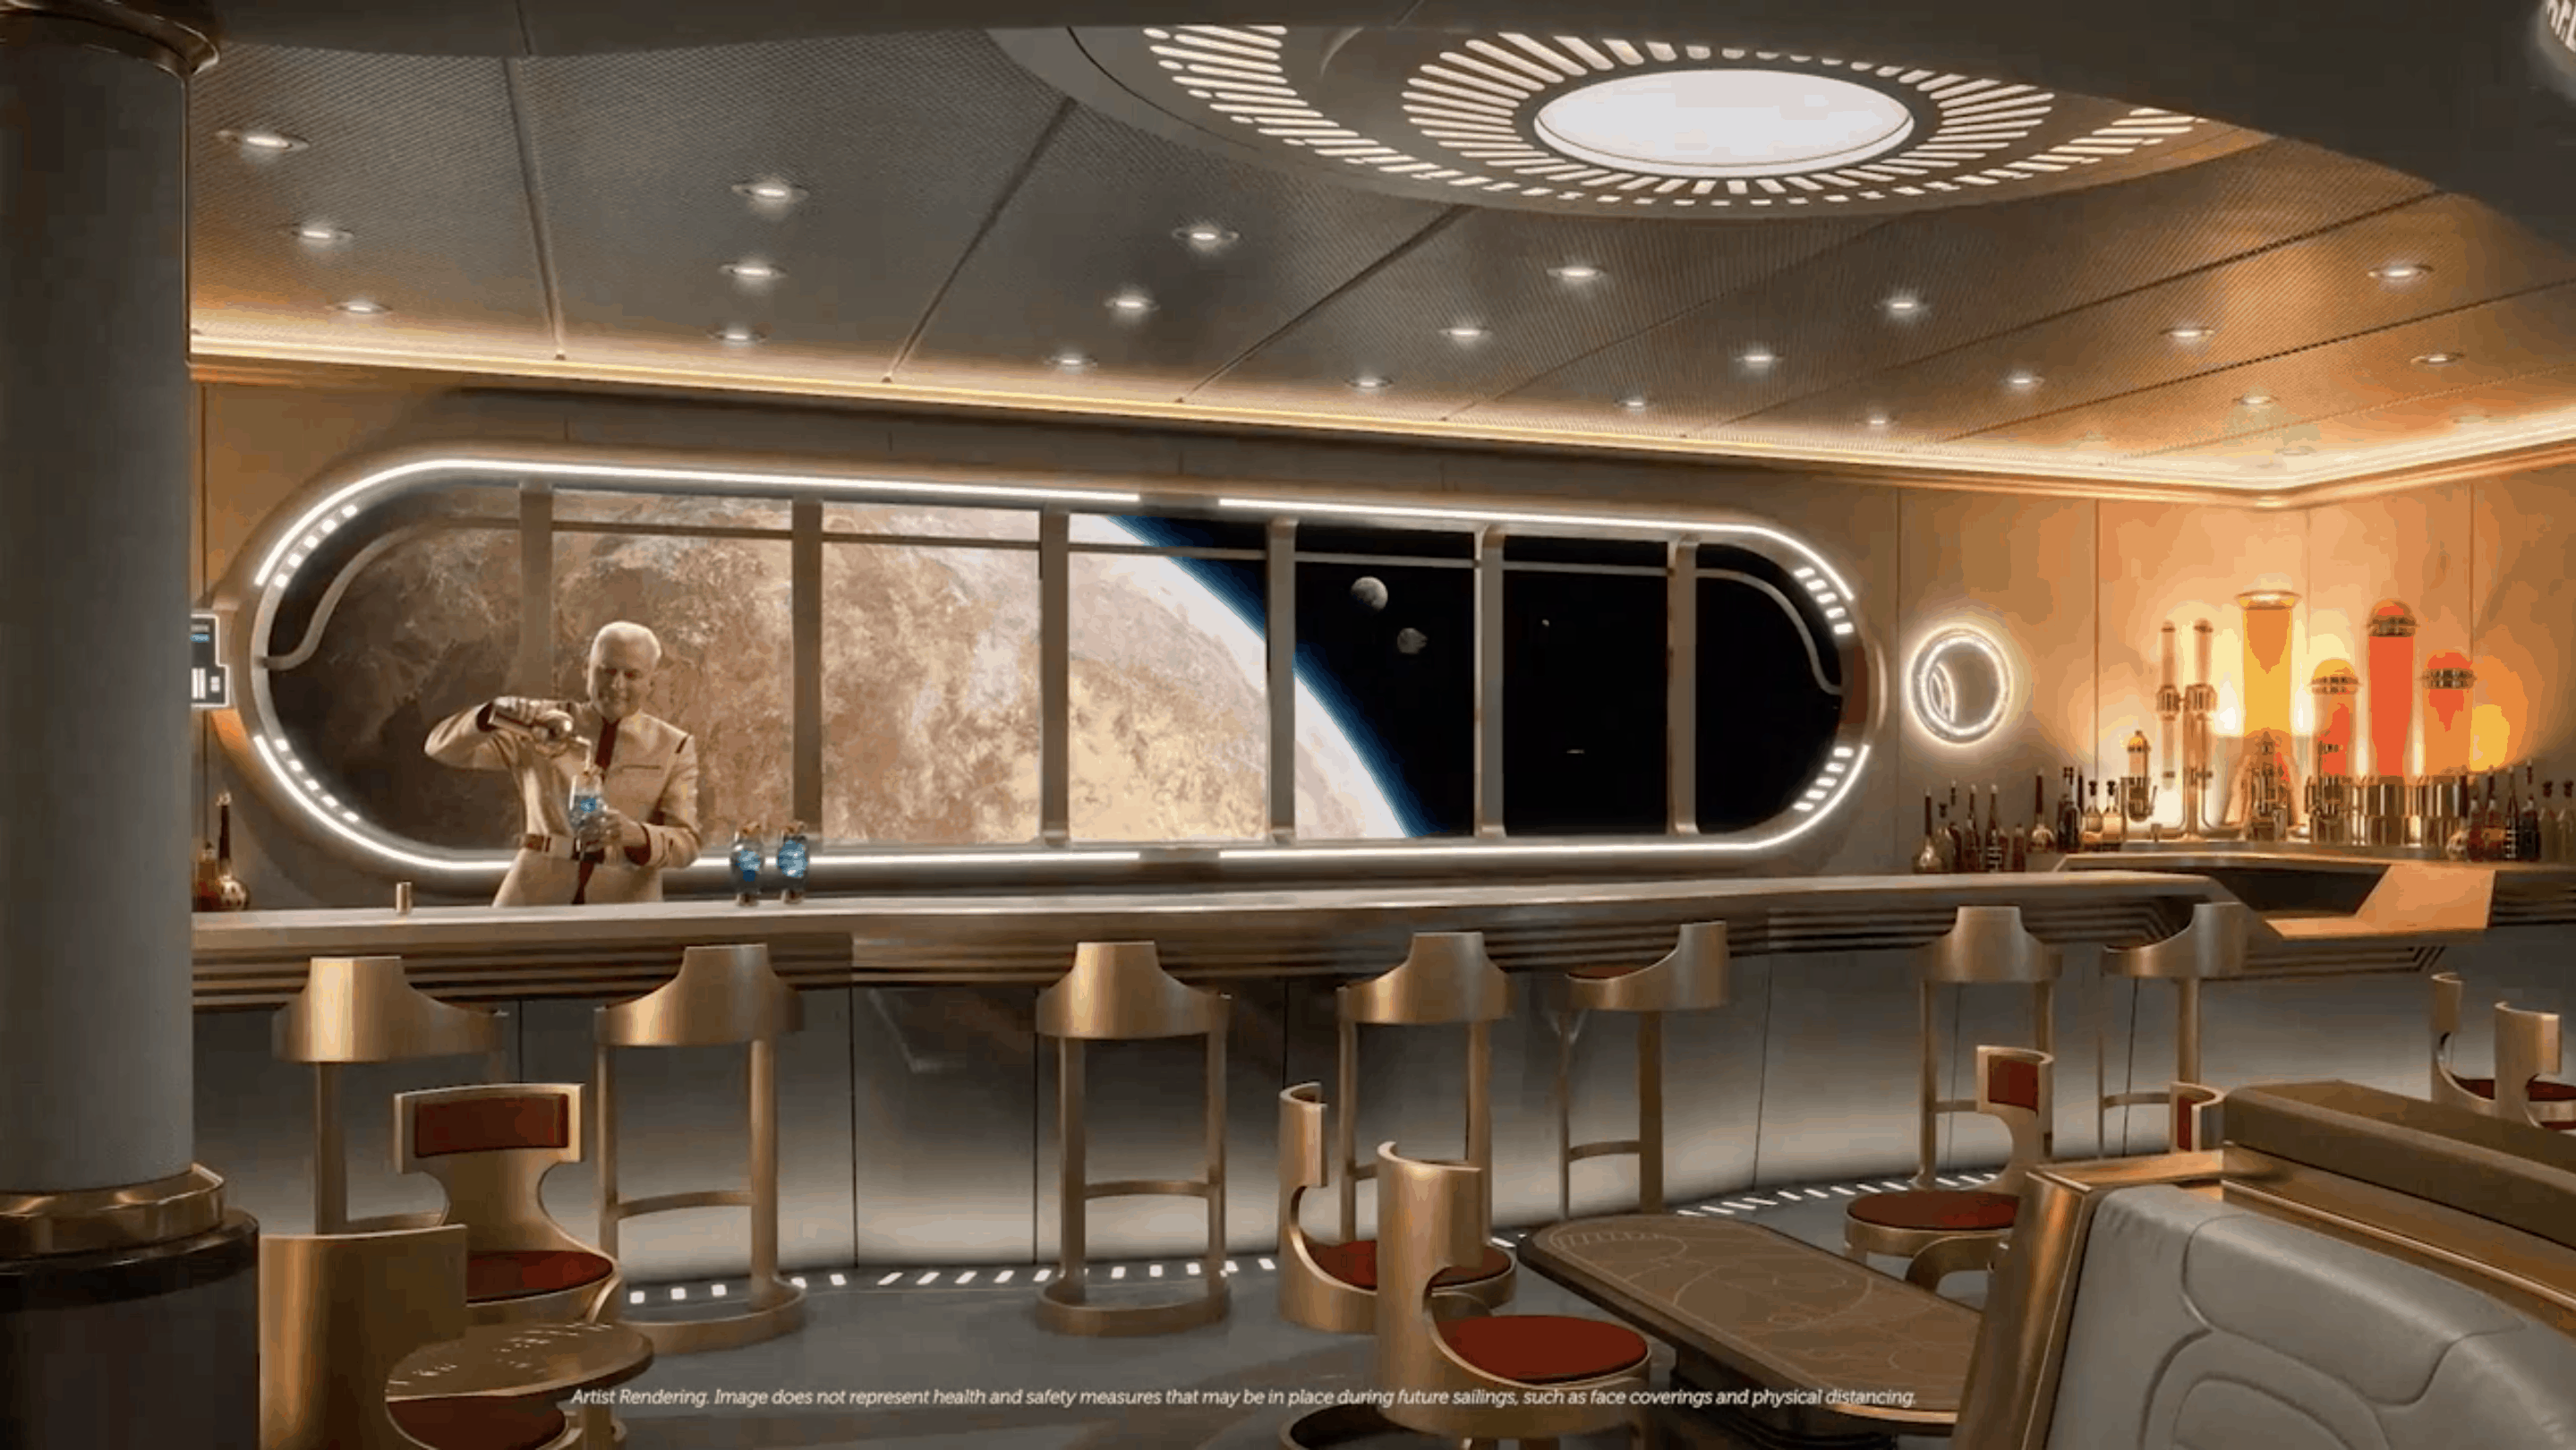 Star Wars Hyperspace Lounge Disney Wish 2